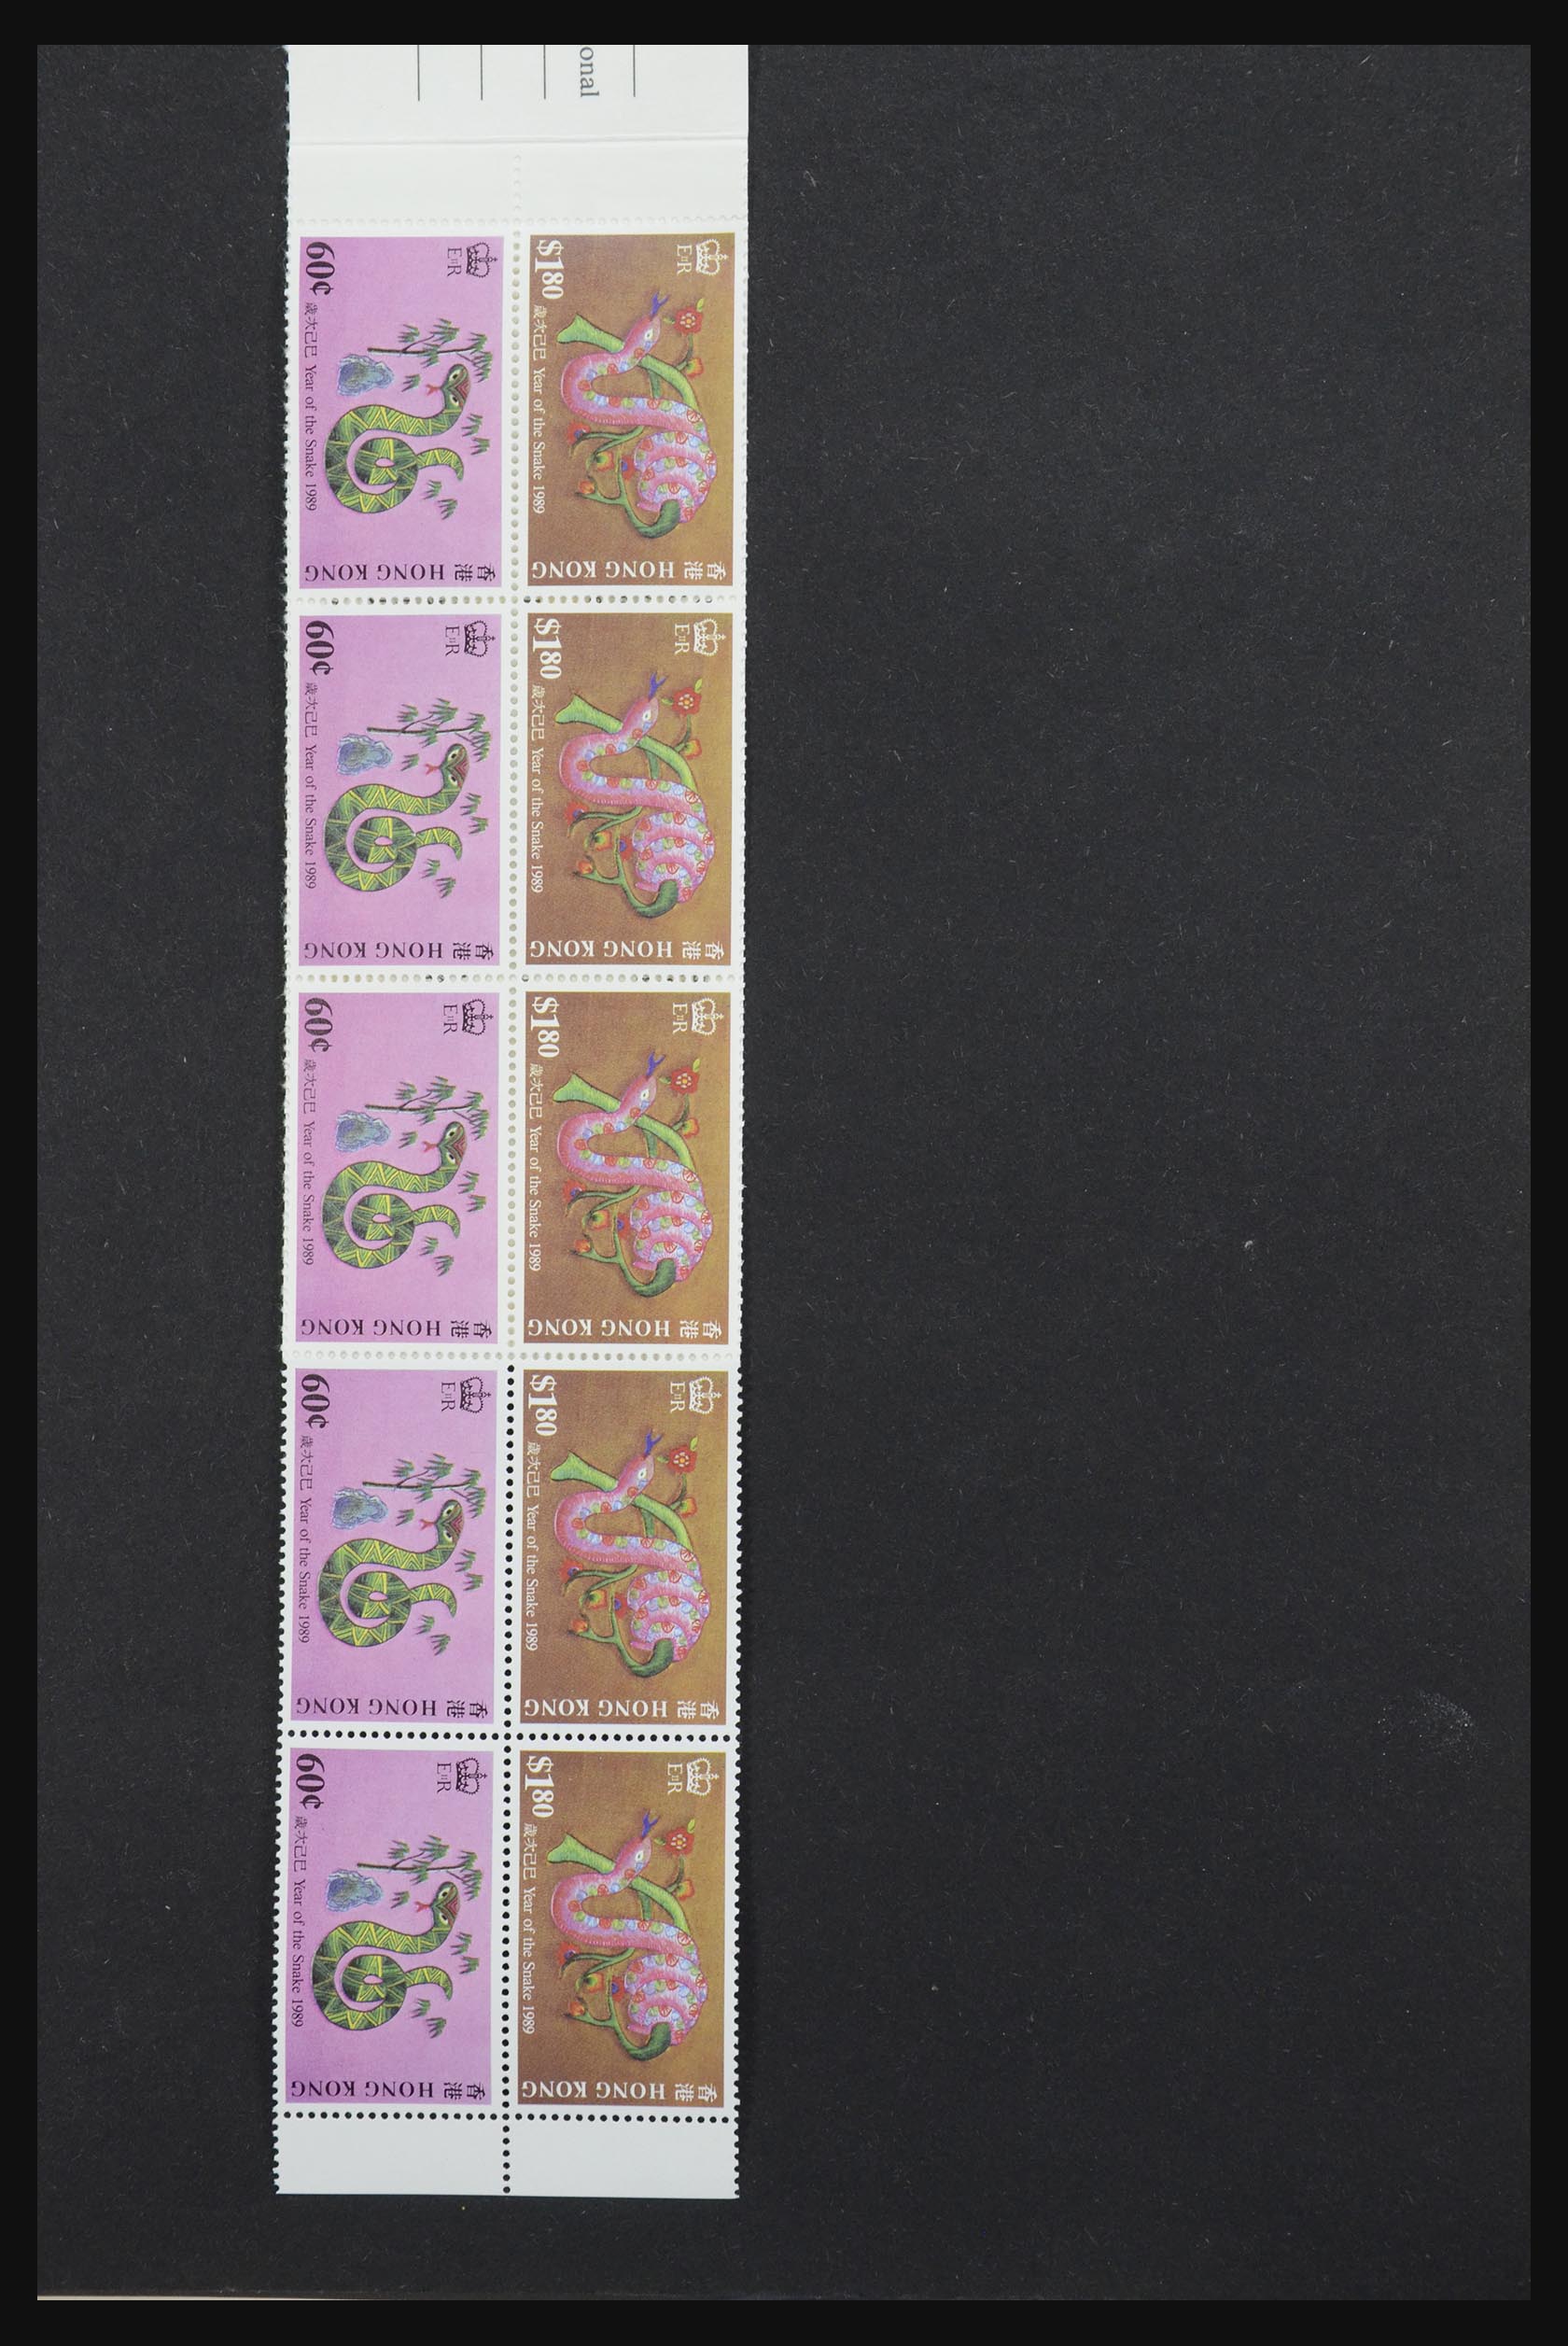 31994 005 - 31994 Hongkong 1974-2003.